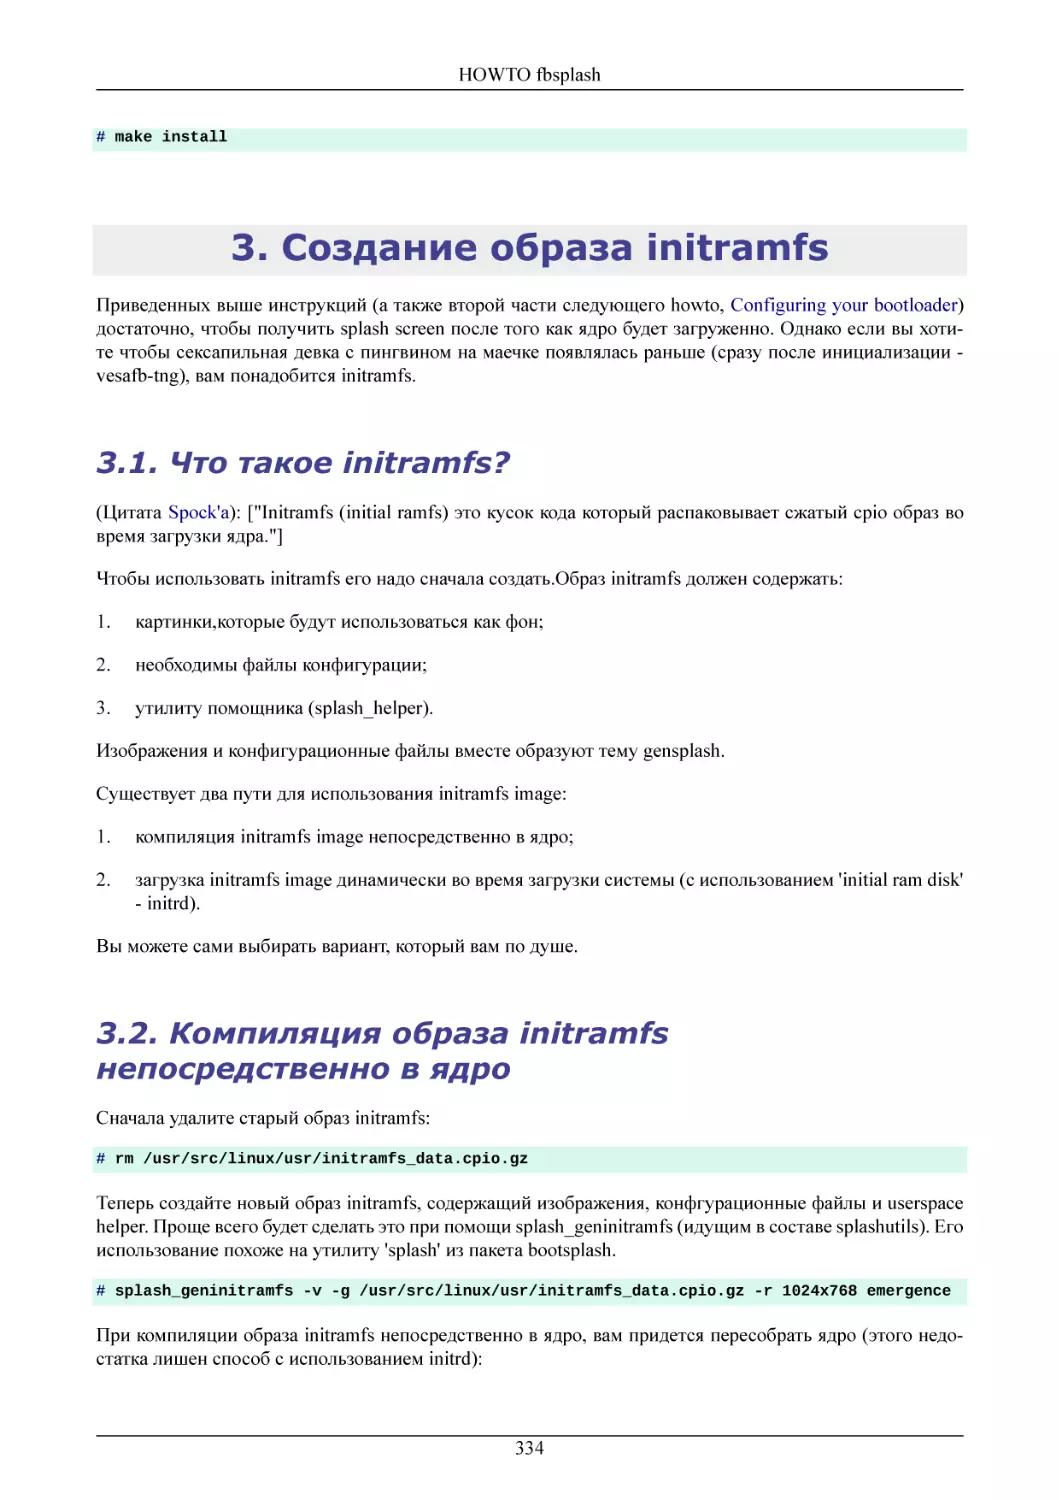 Создание образа initramfs
Что такое initramfs?
Компиляция образа initramfs непосредственно в ядро